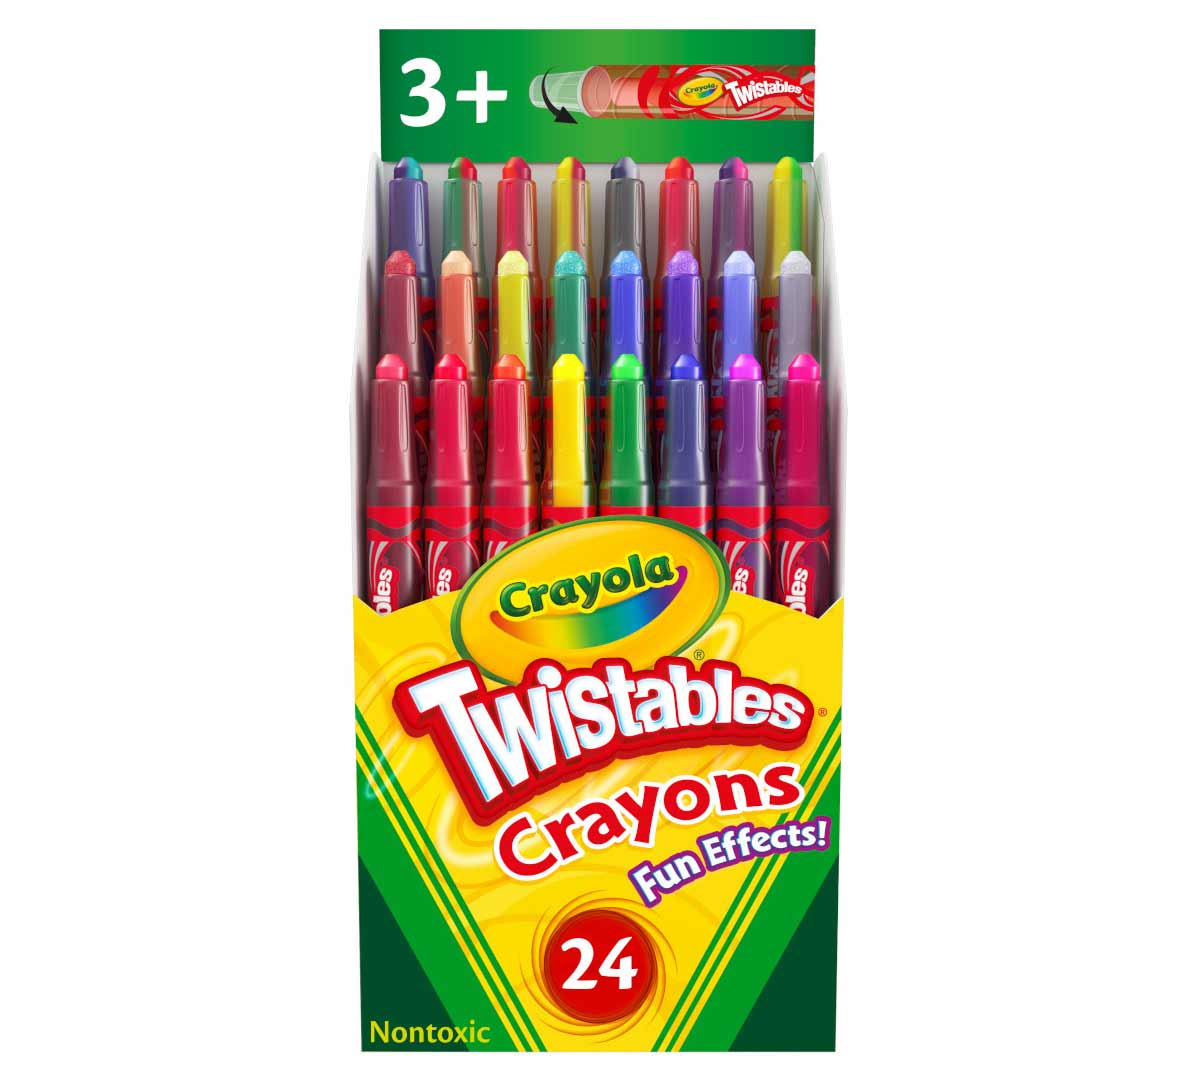 https://shop.crayola.com/on/demandware.static/-/Sites-crayola-storefront/default/dwee6a2de5/images/52_9824_Twistables-Crayons_Fun-Effects_24ct_PDP_01.jpg